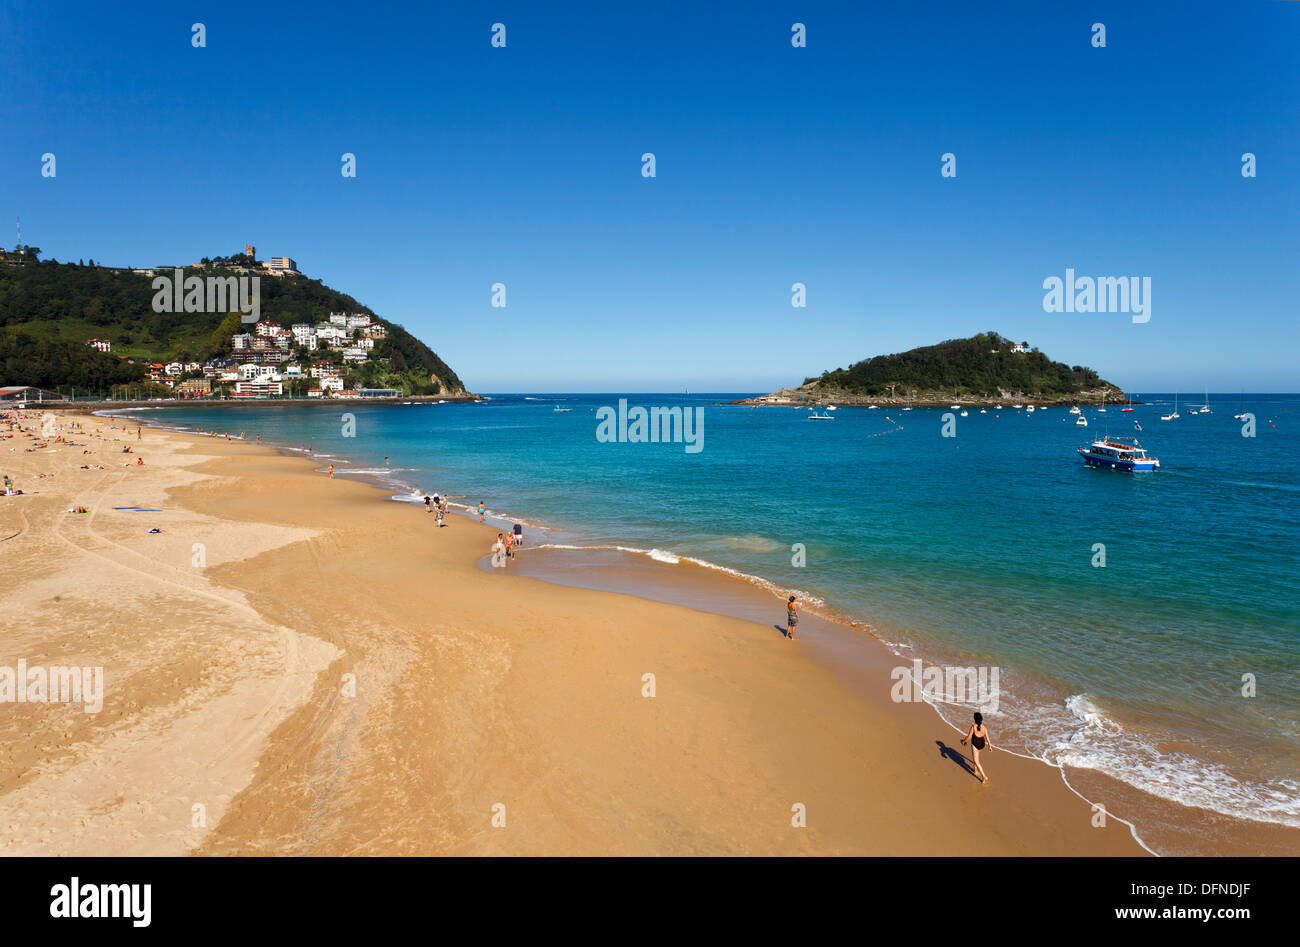 Spiaggia di sabbia con la luce del sole, Playa Ondarreta, Isla de Santa Clara, Bahia de la Concha, baia di La Concha, San Sebastian, Donostia Foto Stock